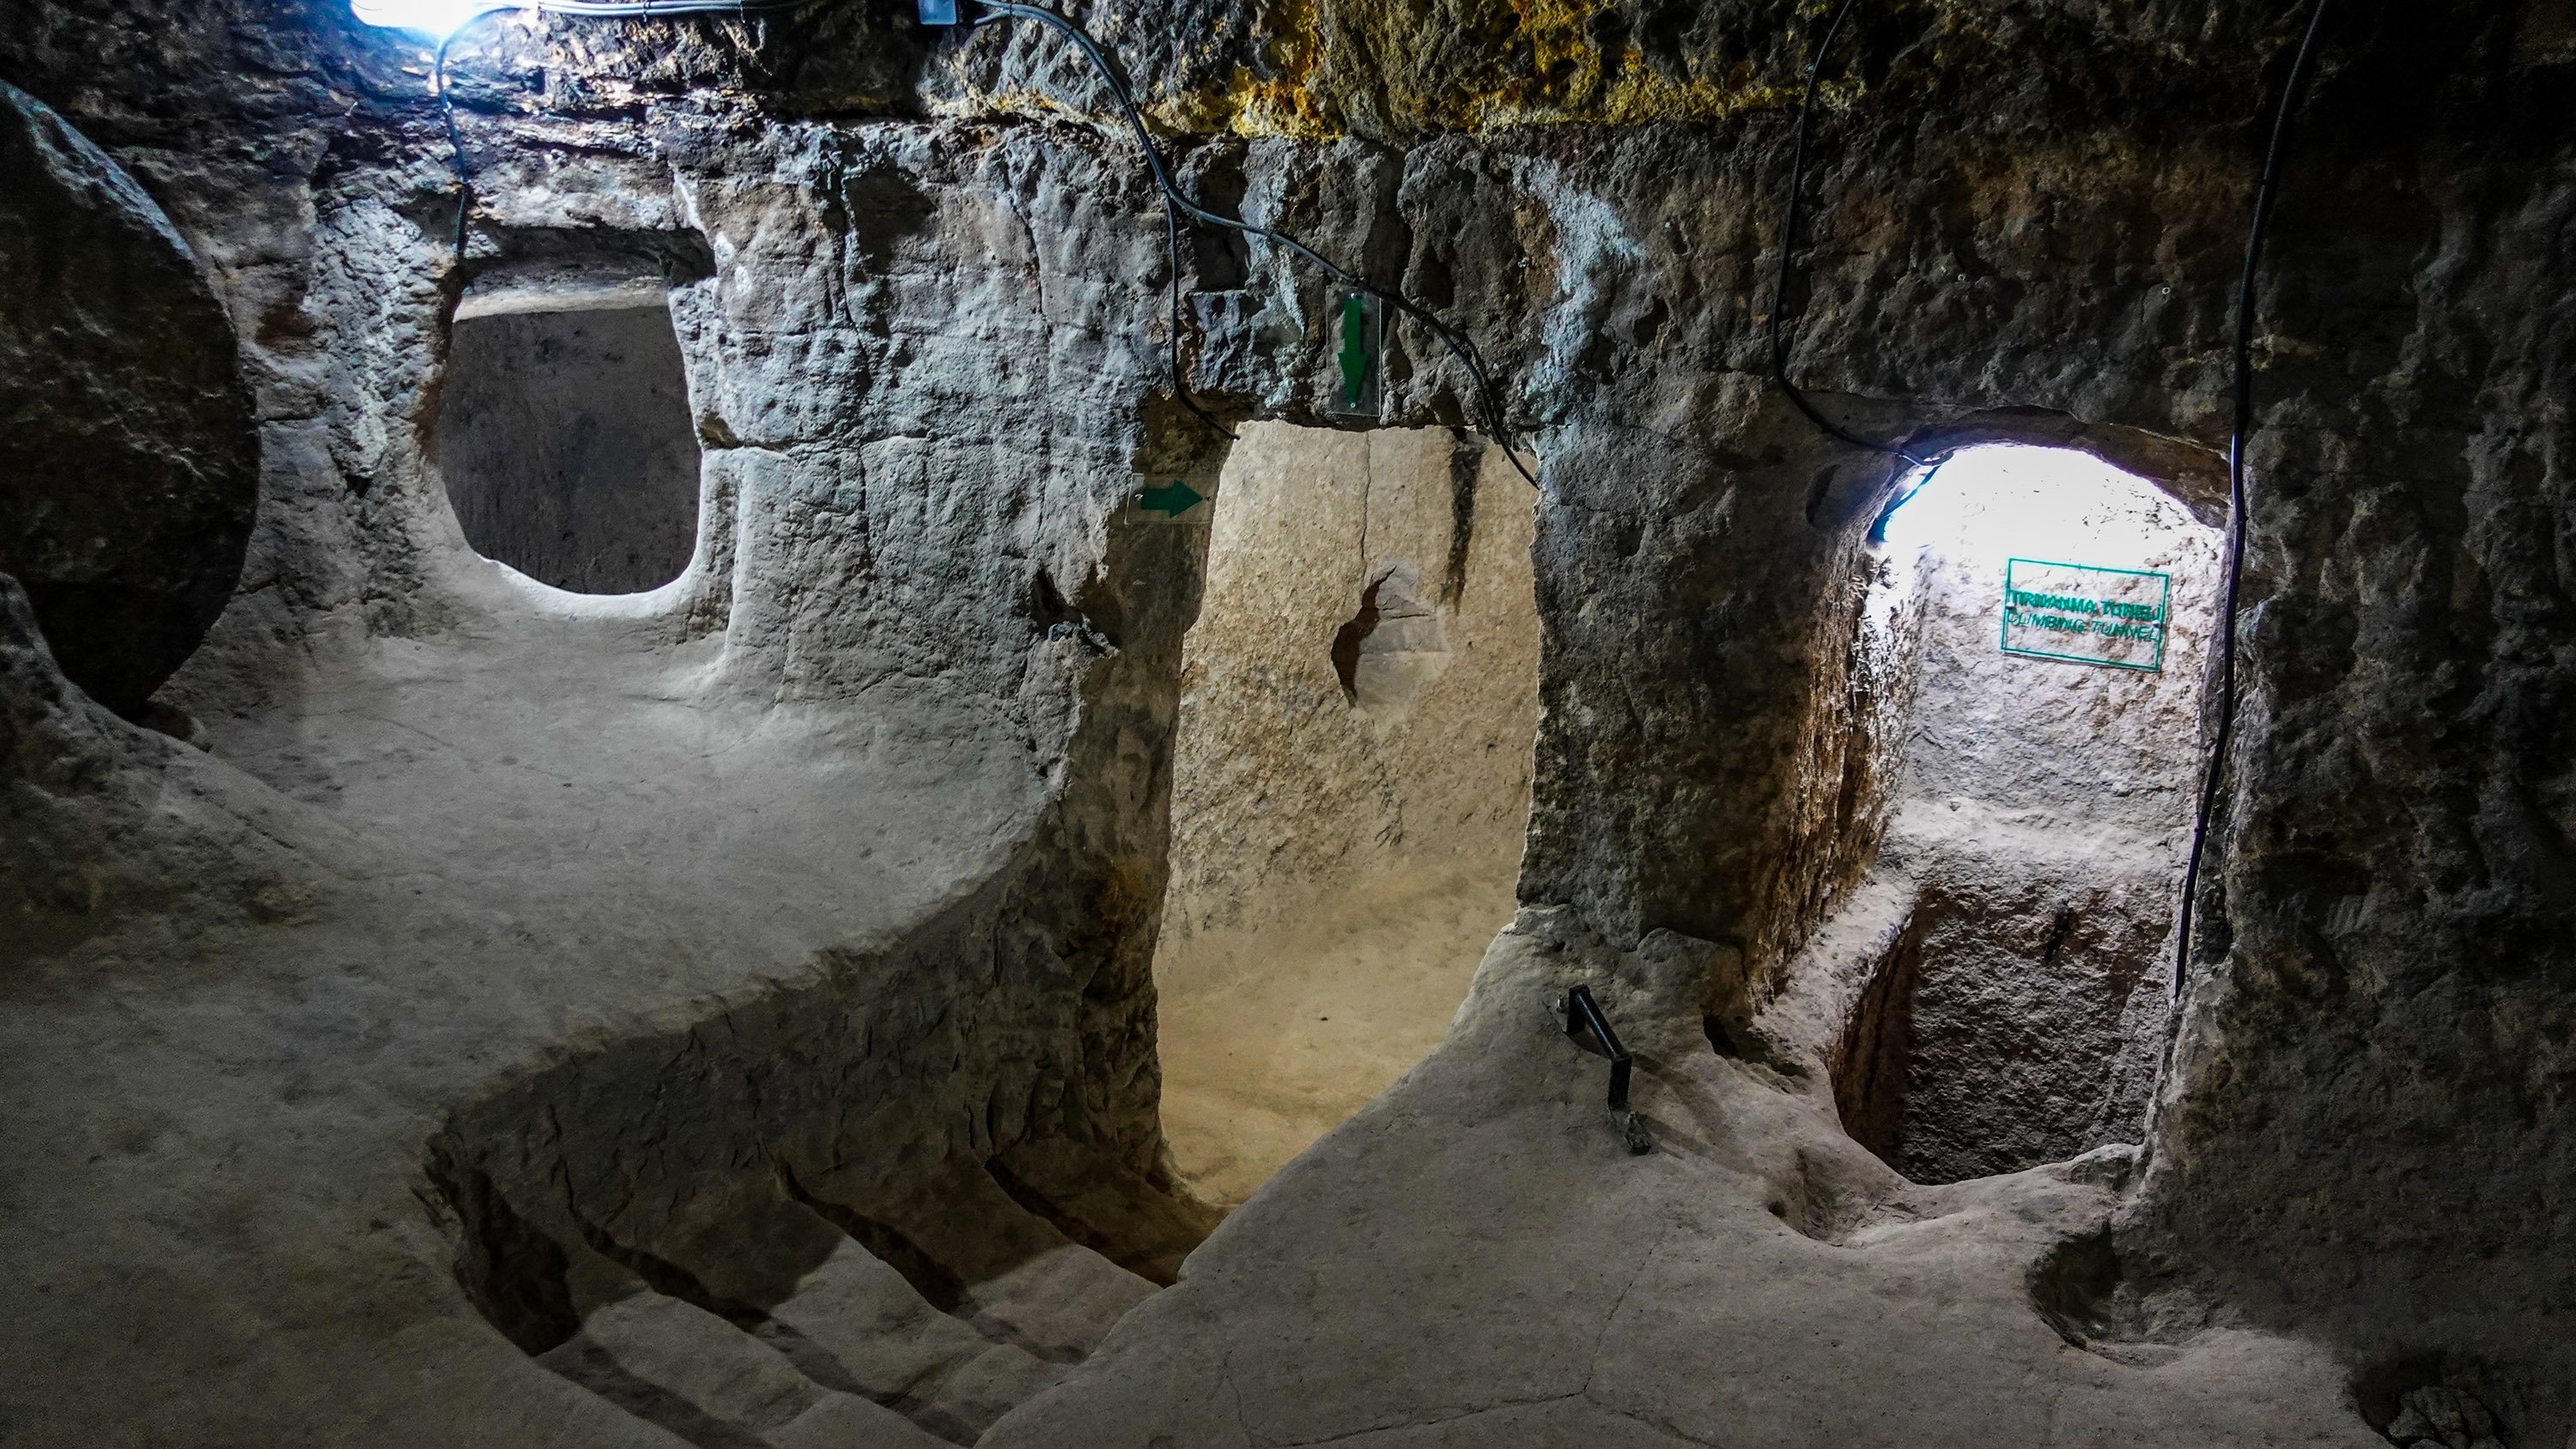 Some of the rooms in St. Mercurius Underground City. (Photo by Argun Konuk)